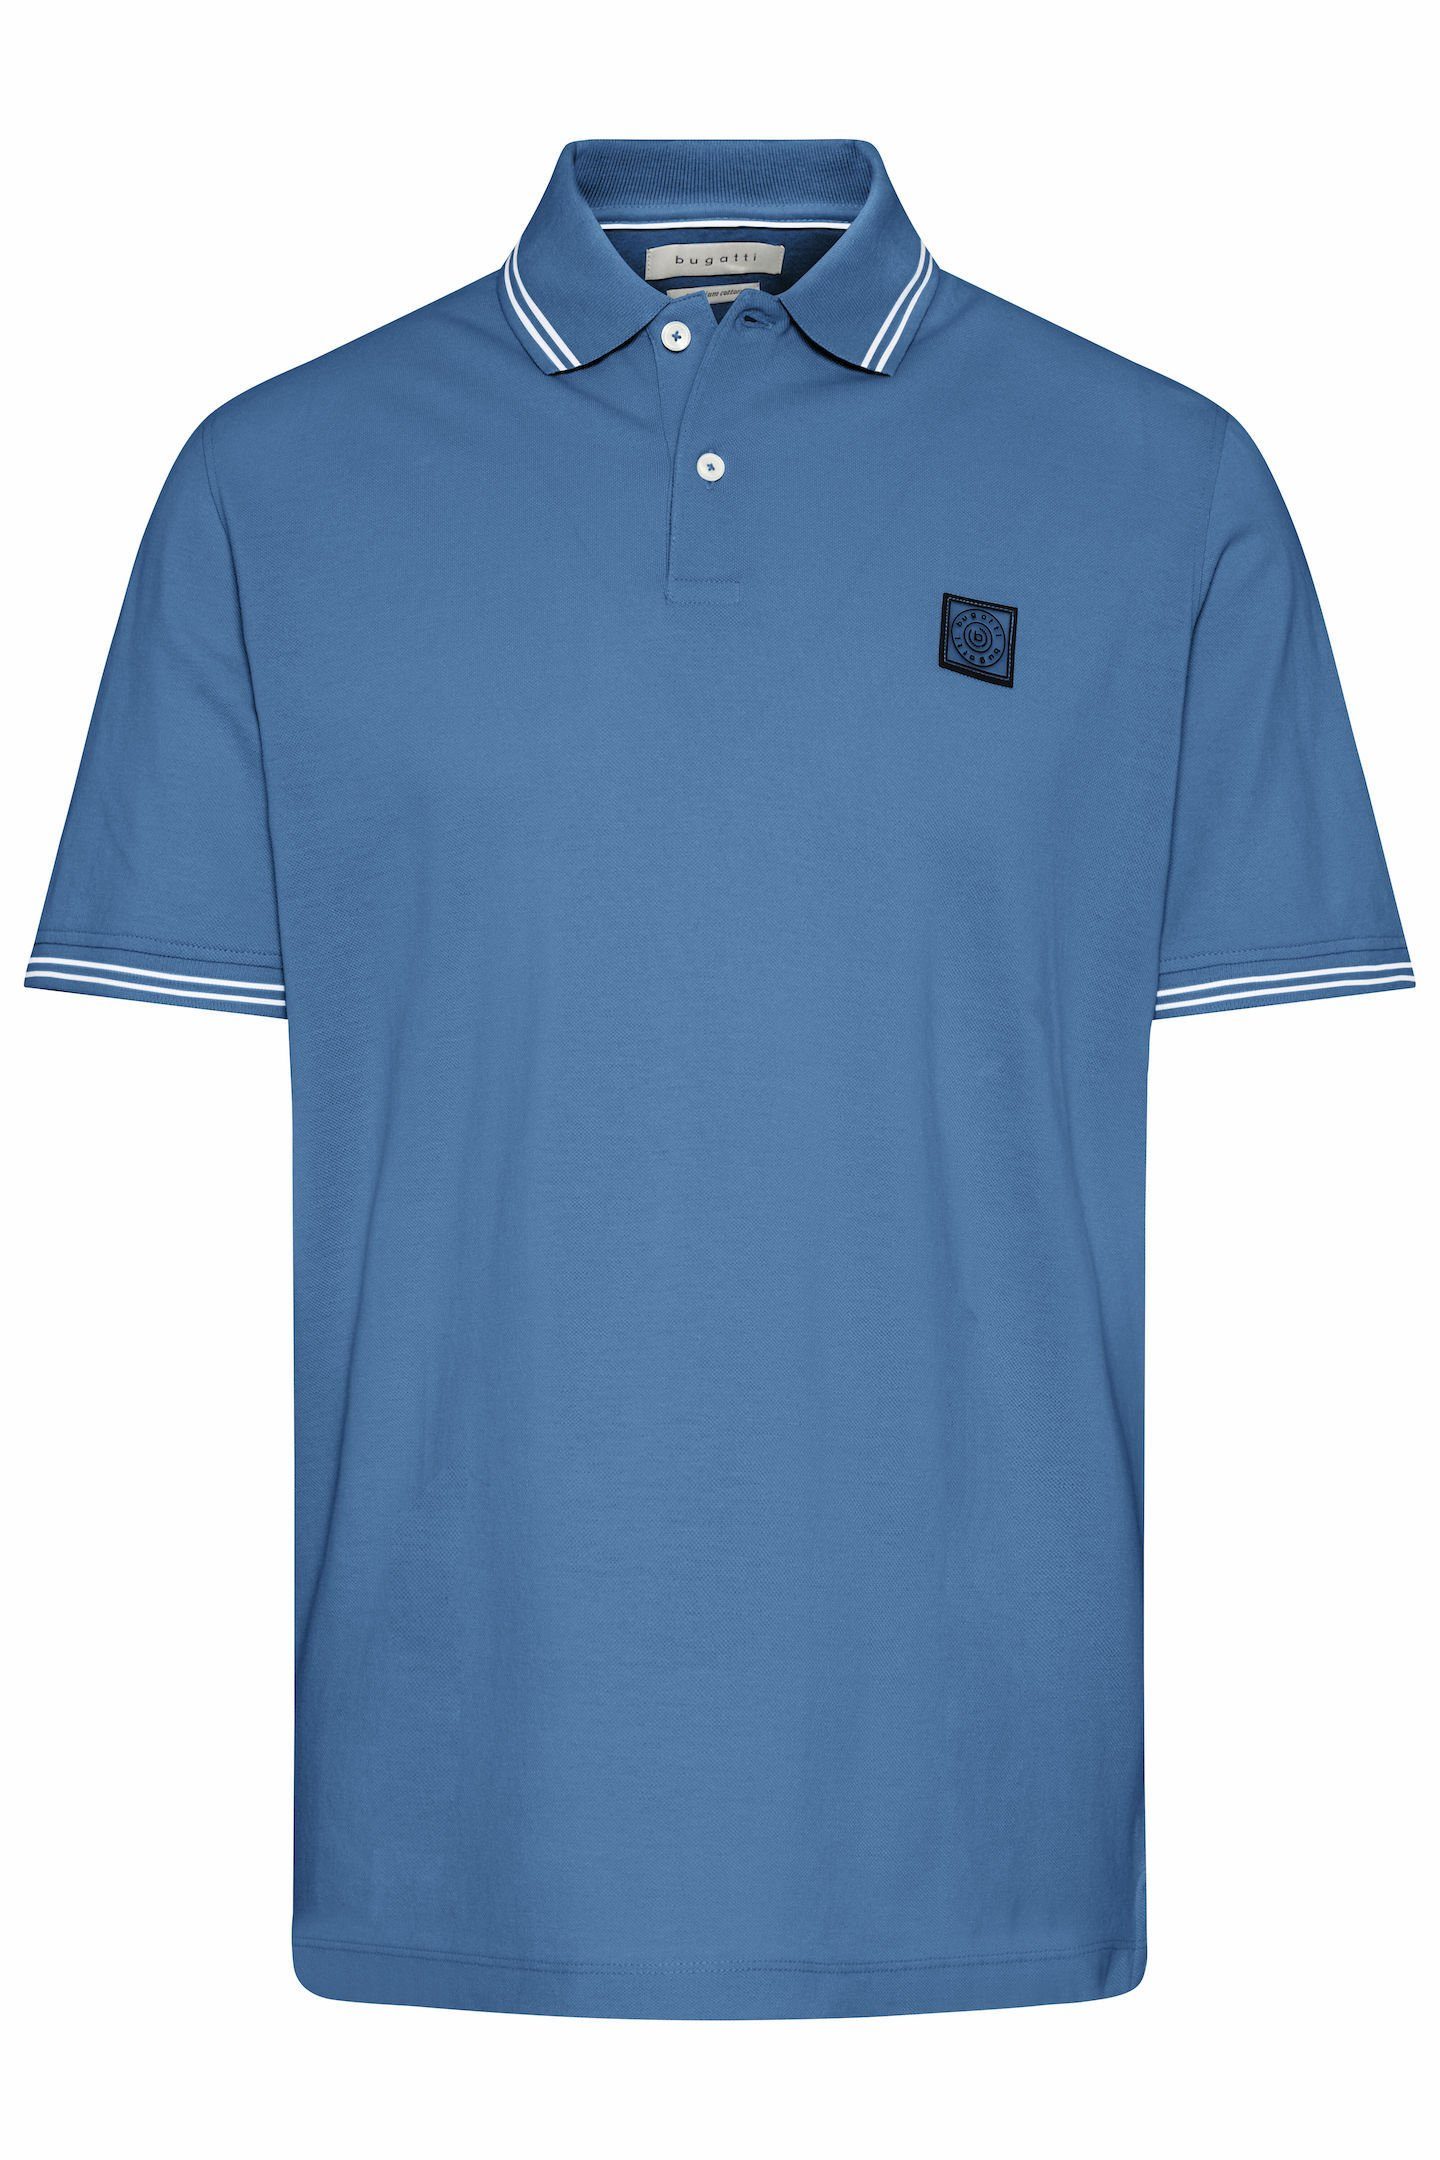 bugatti Poloshirt mit sportiven Kontraststreifen blau